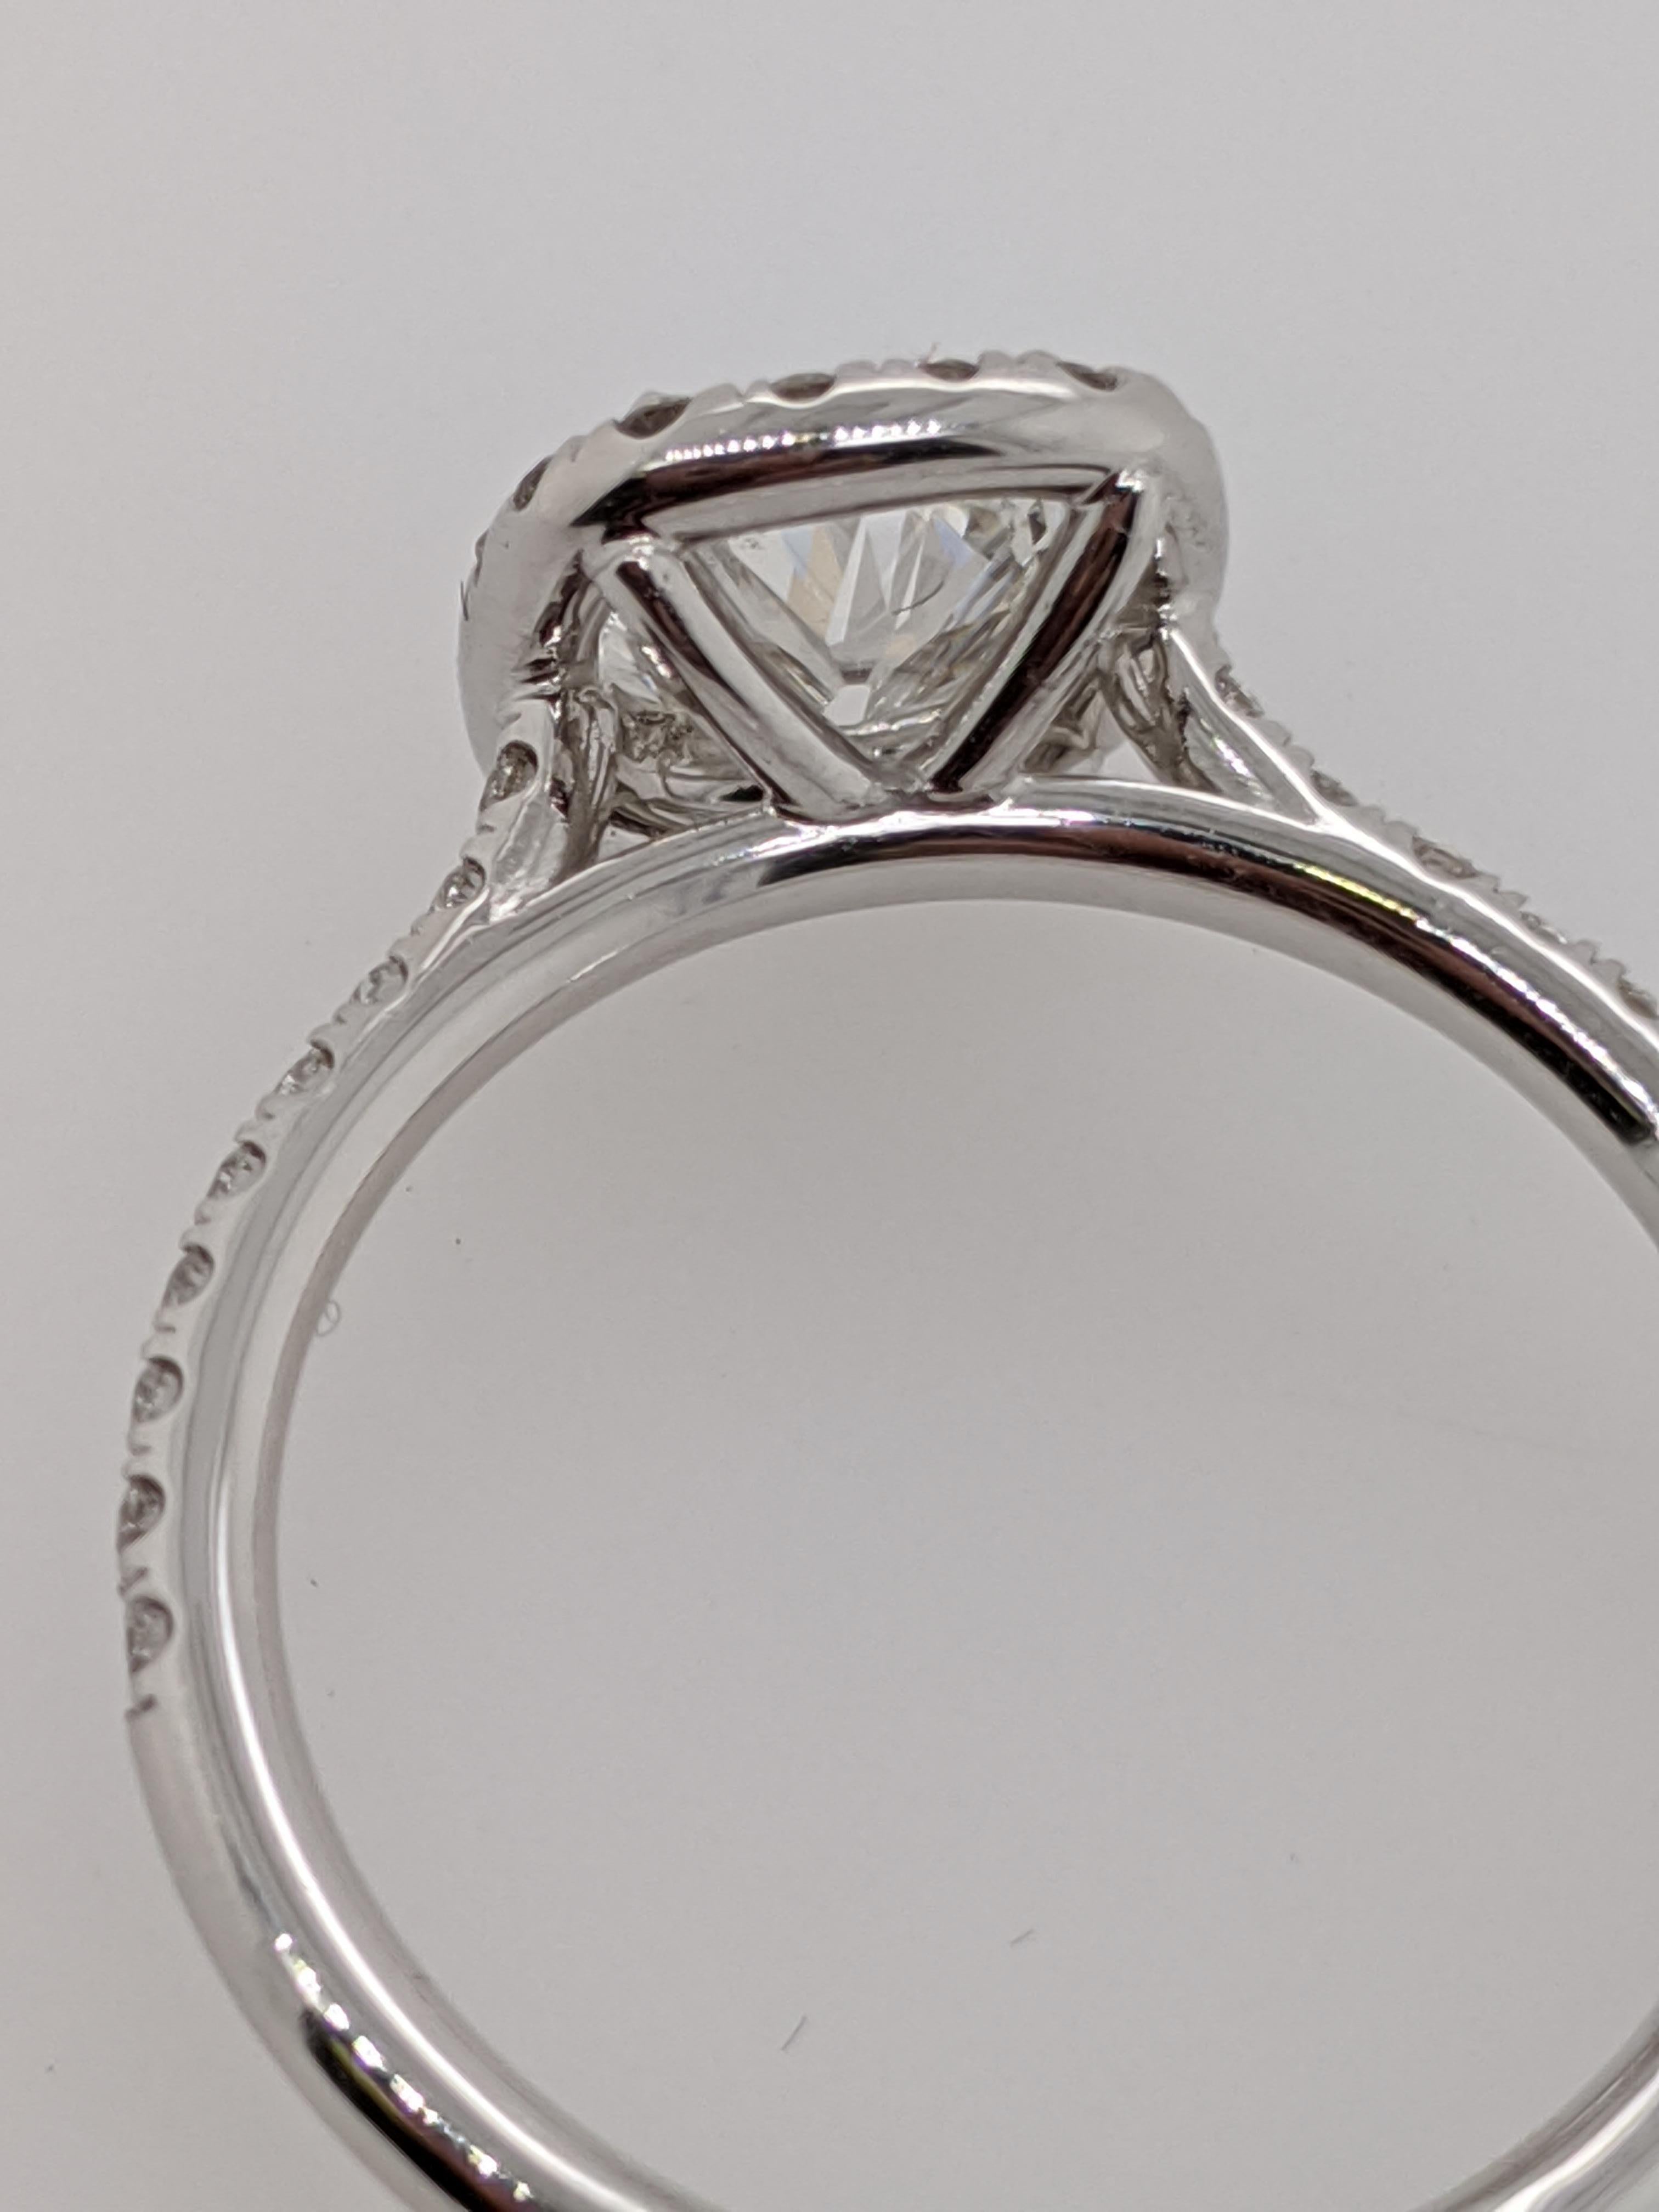 one karat diamond ring